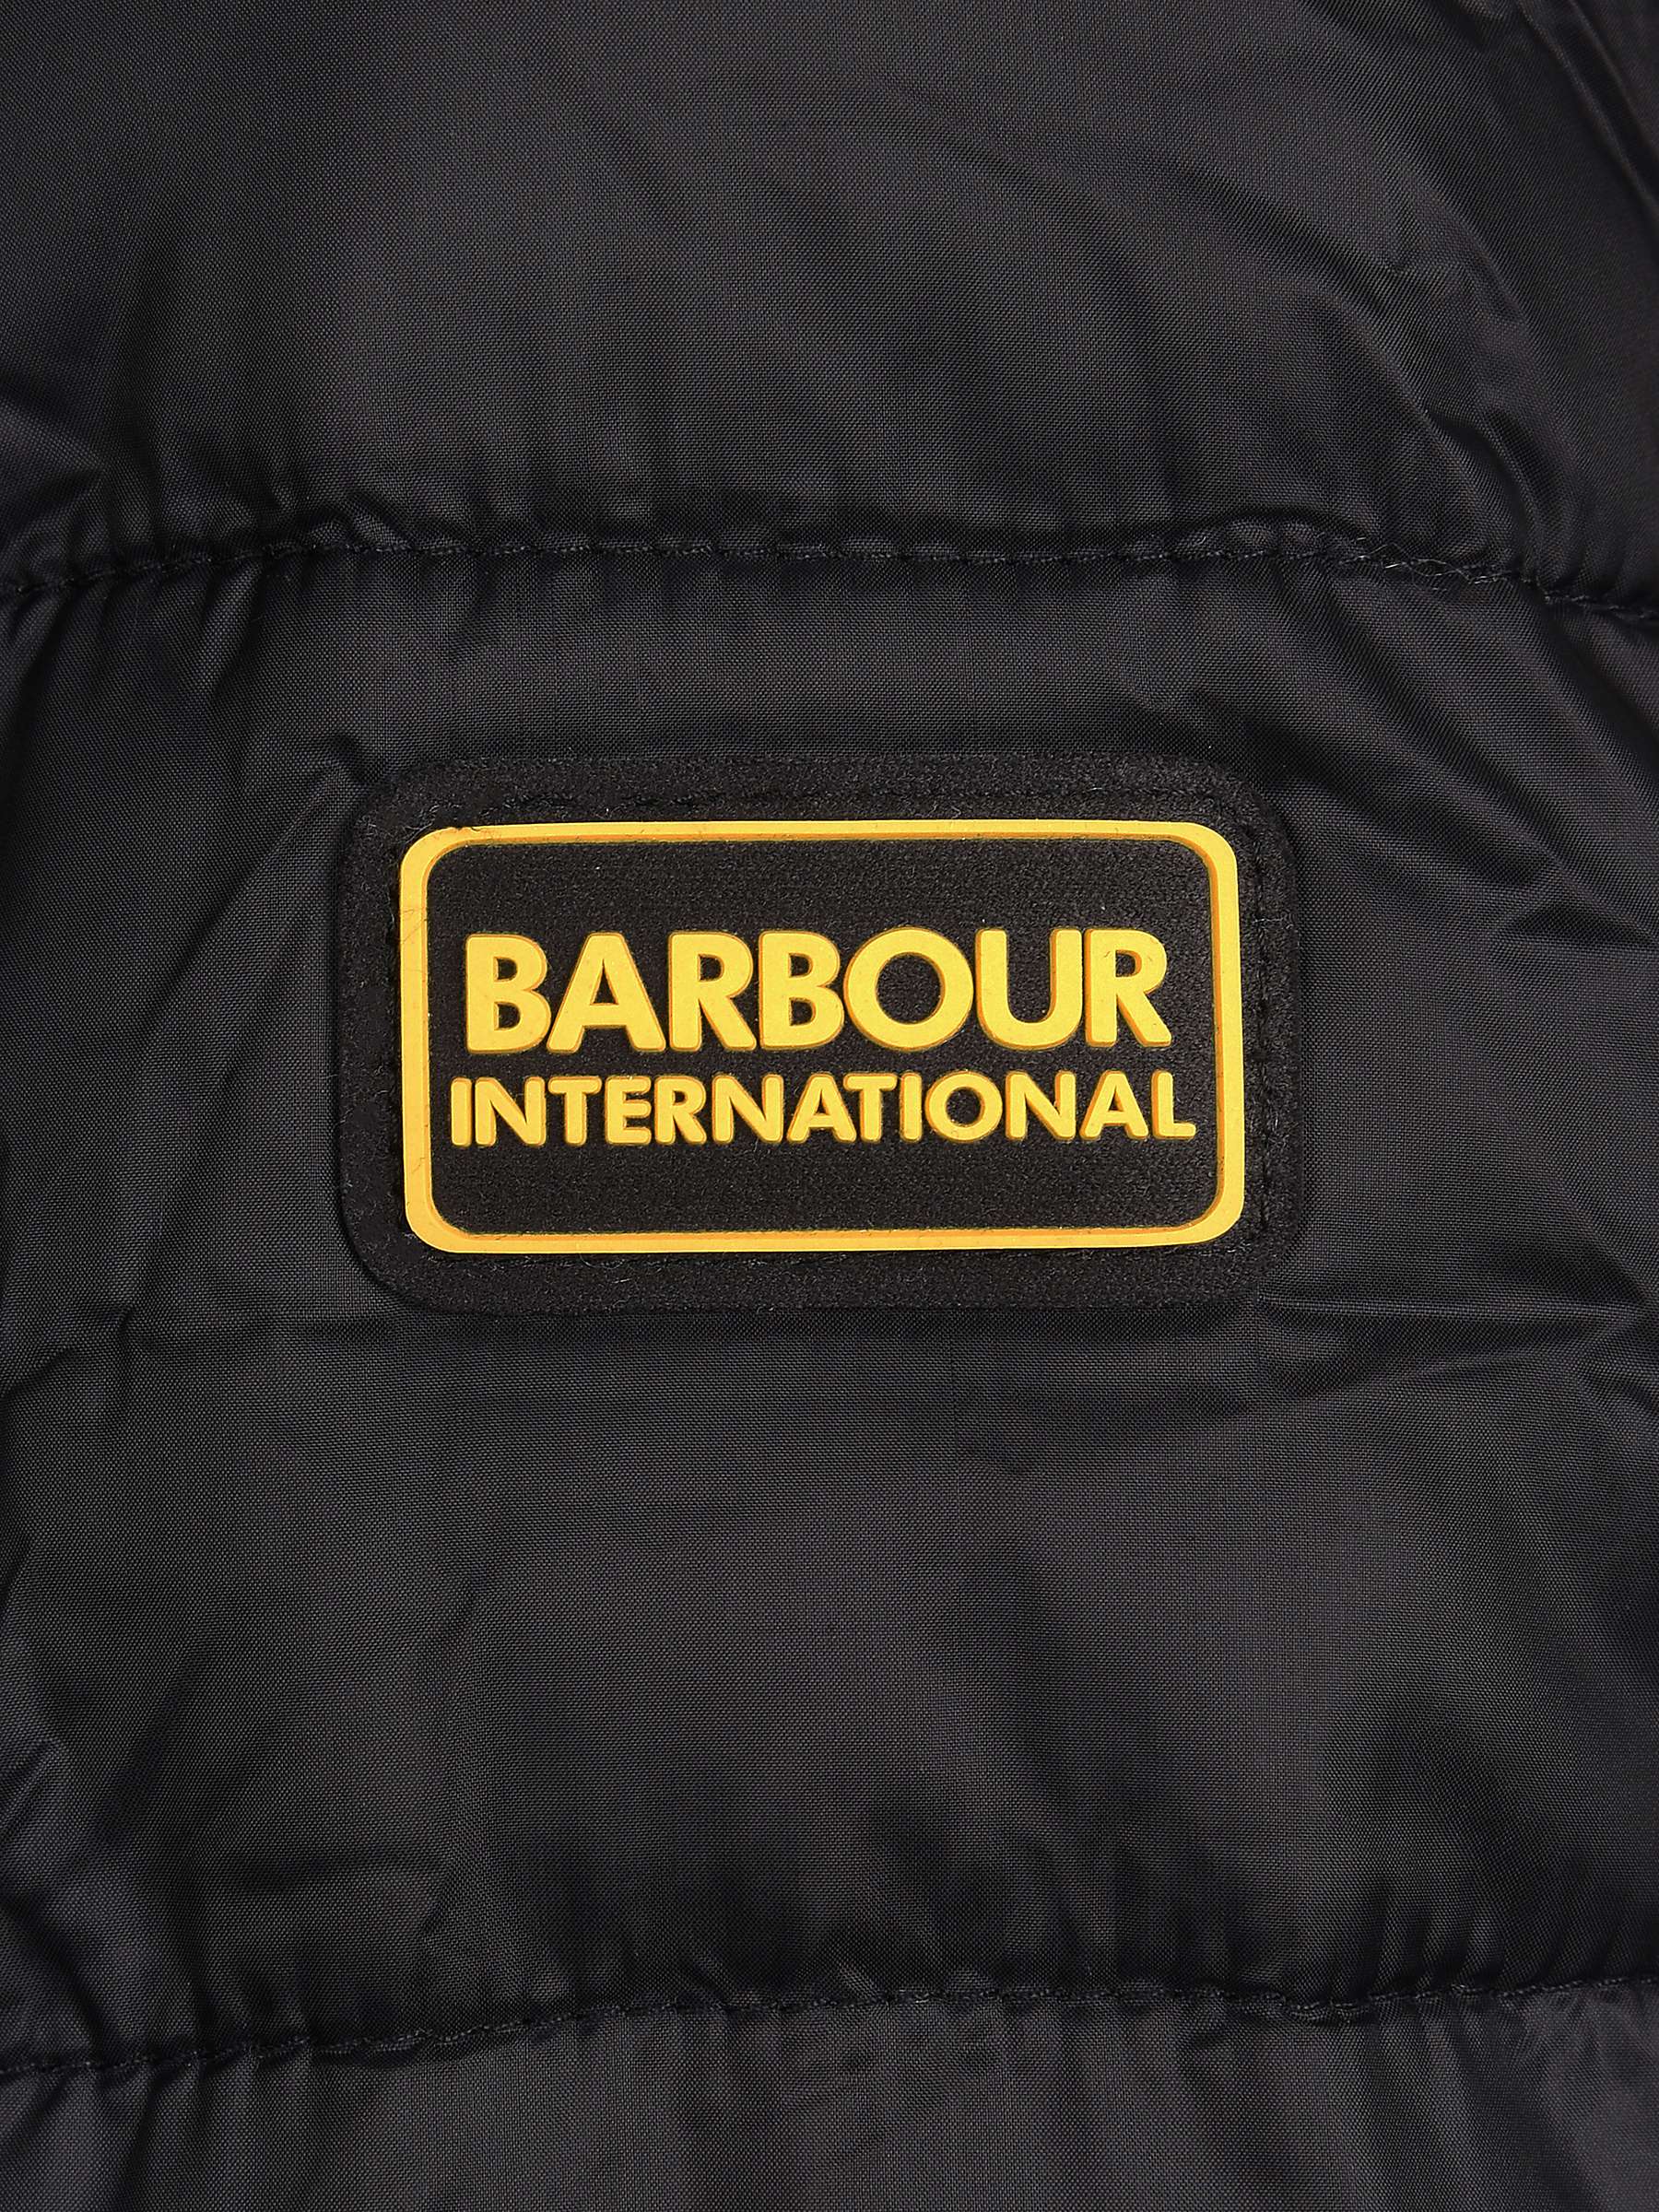 Buy Barbour International Aubern Quilted Jacket Online at johnlewis.com